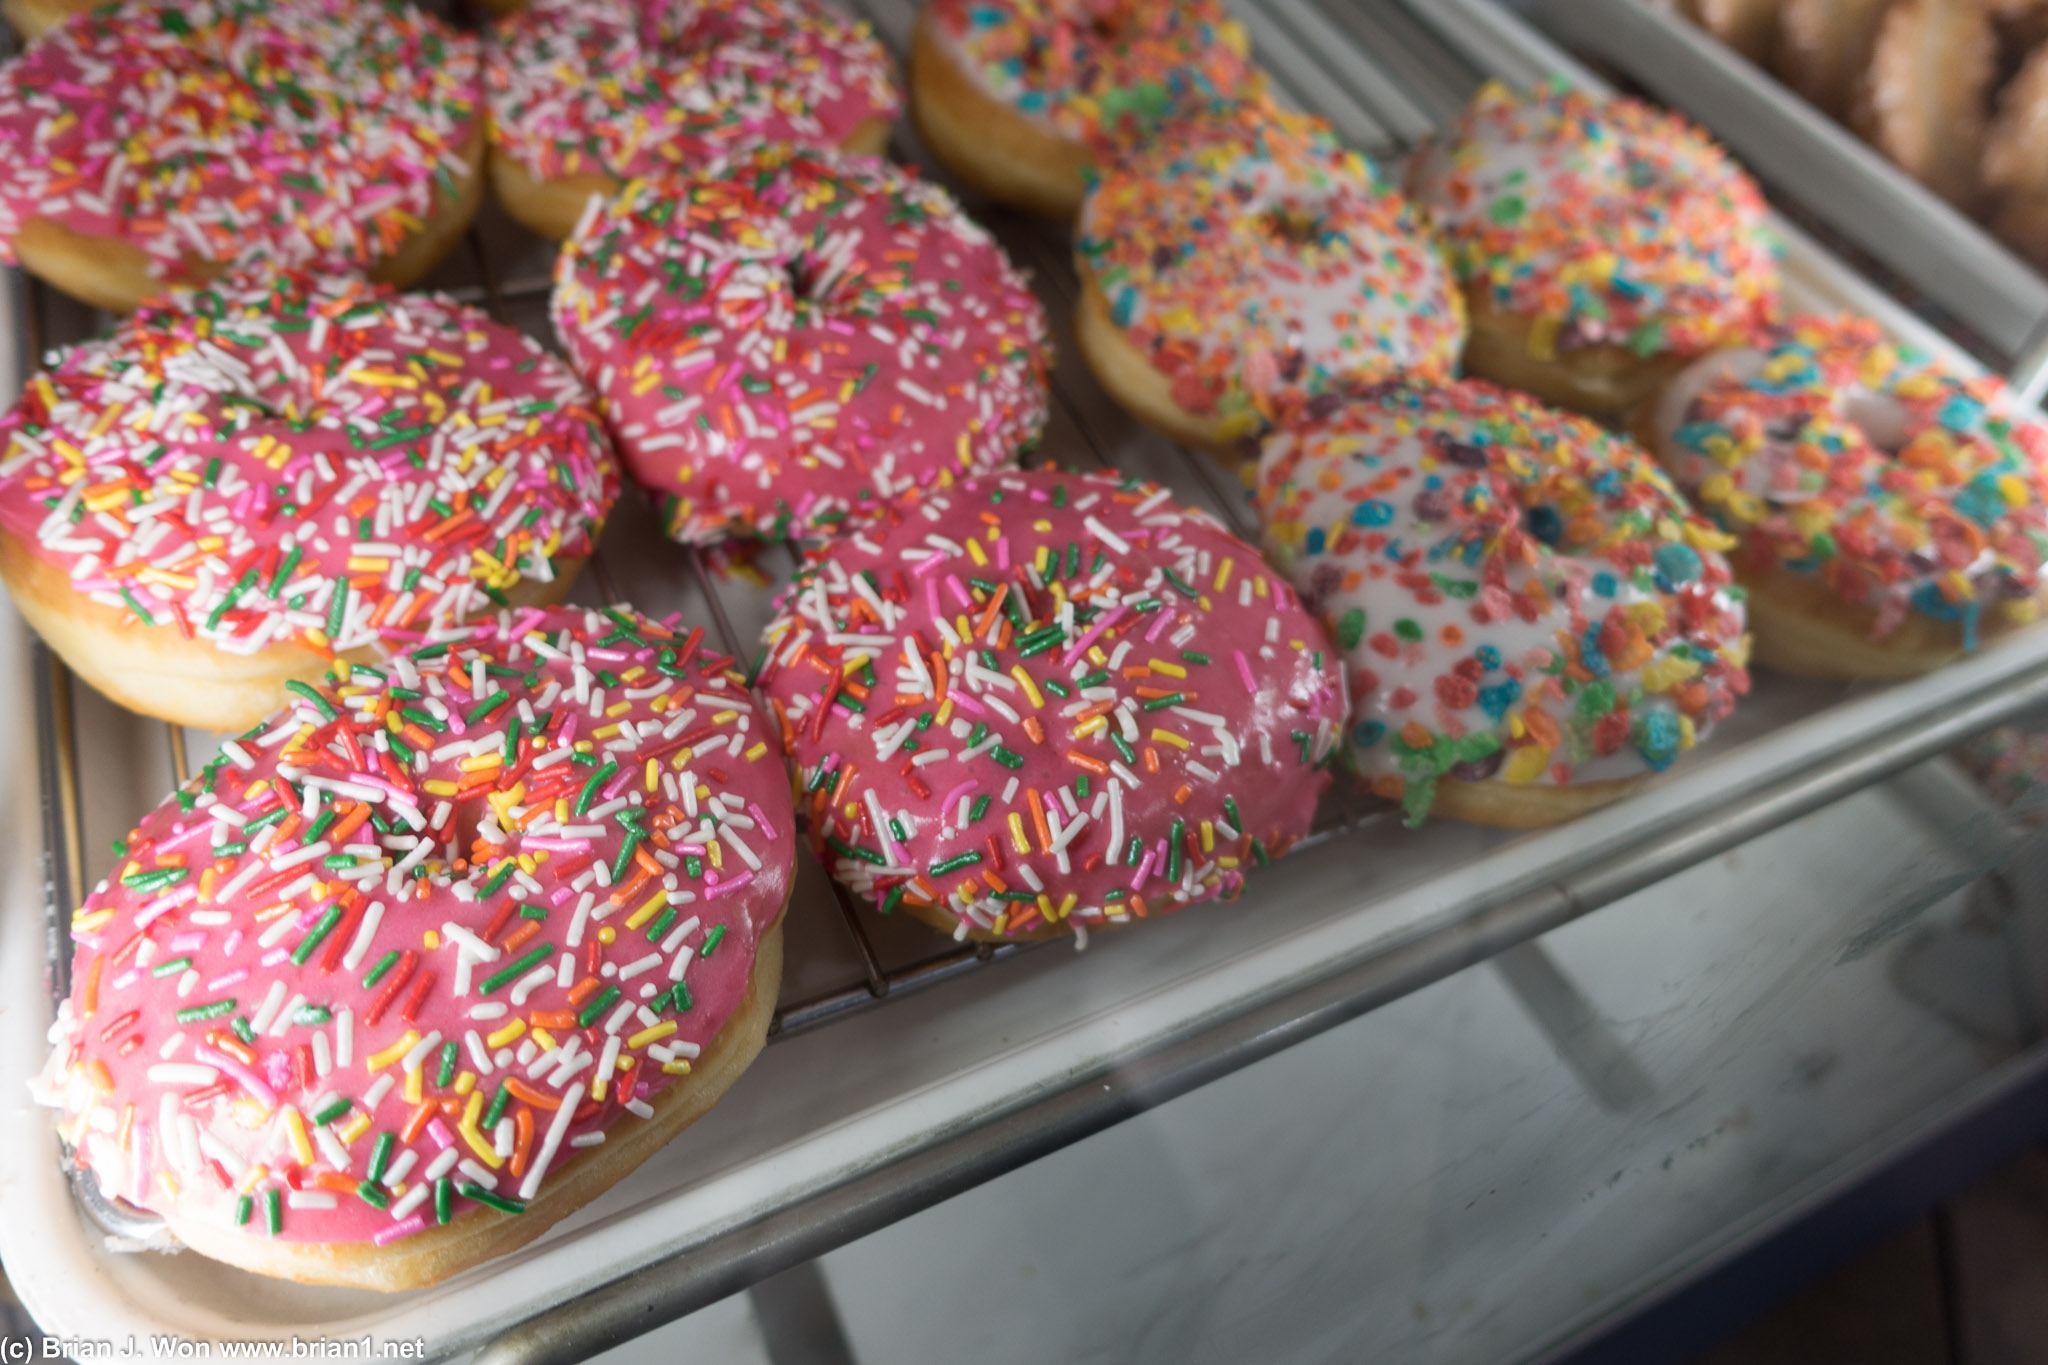 Homer donut next to fruity pebbles.